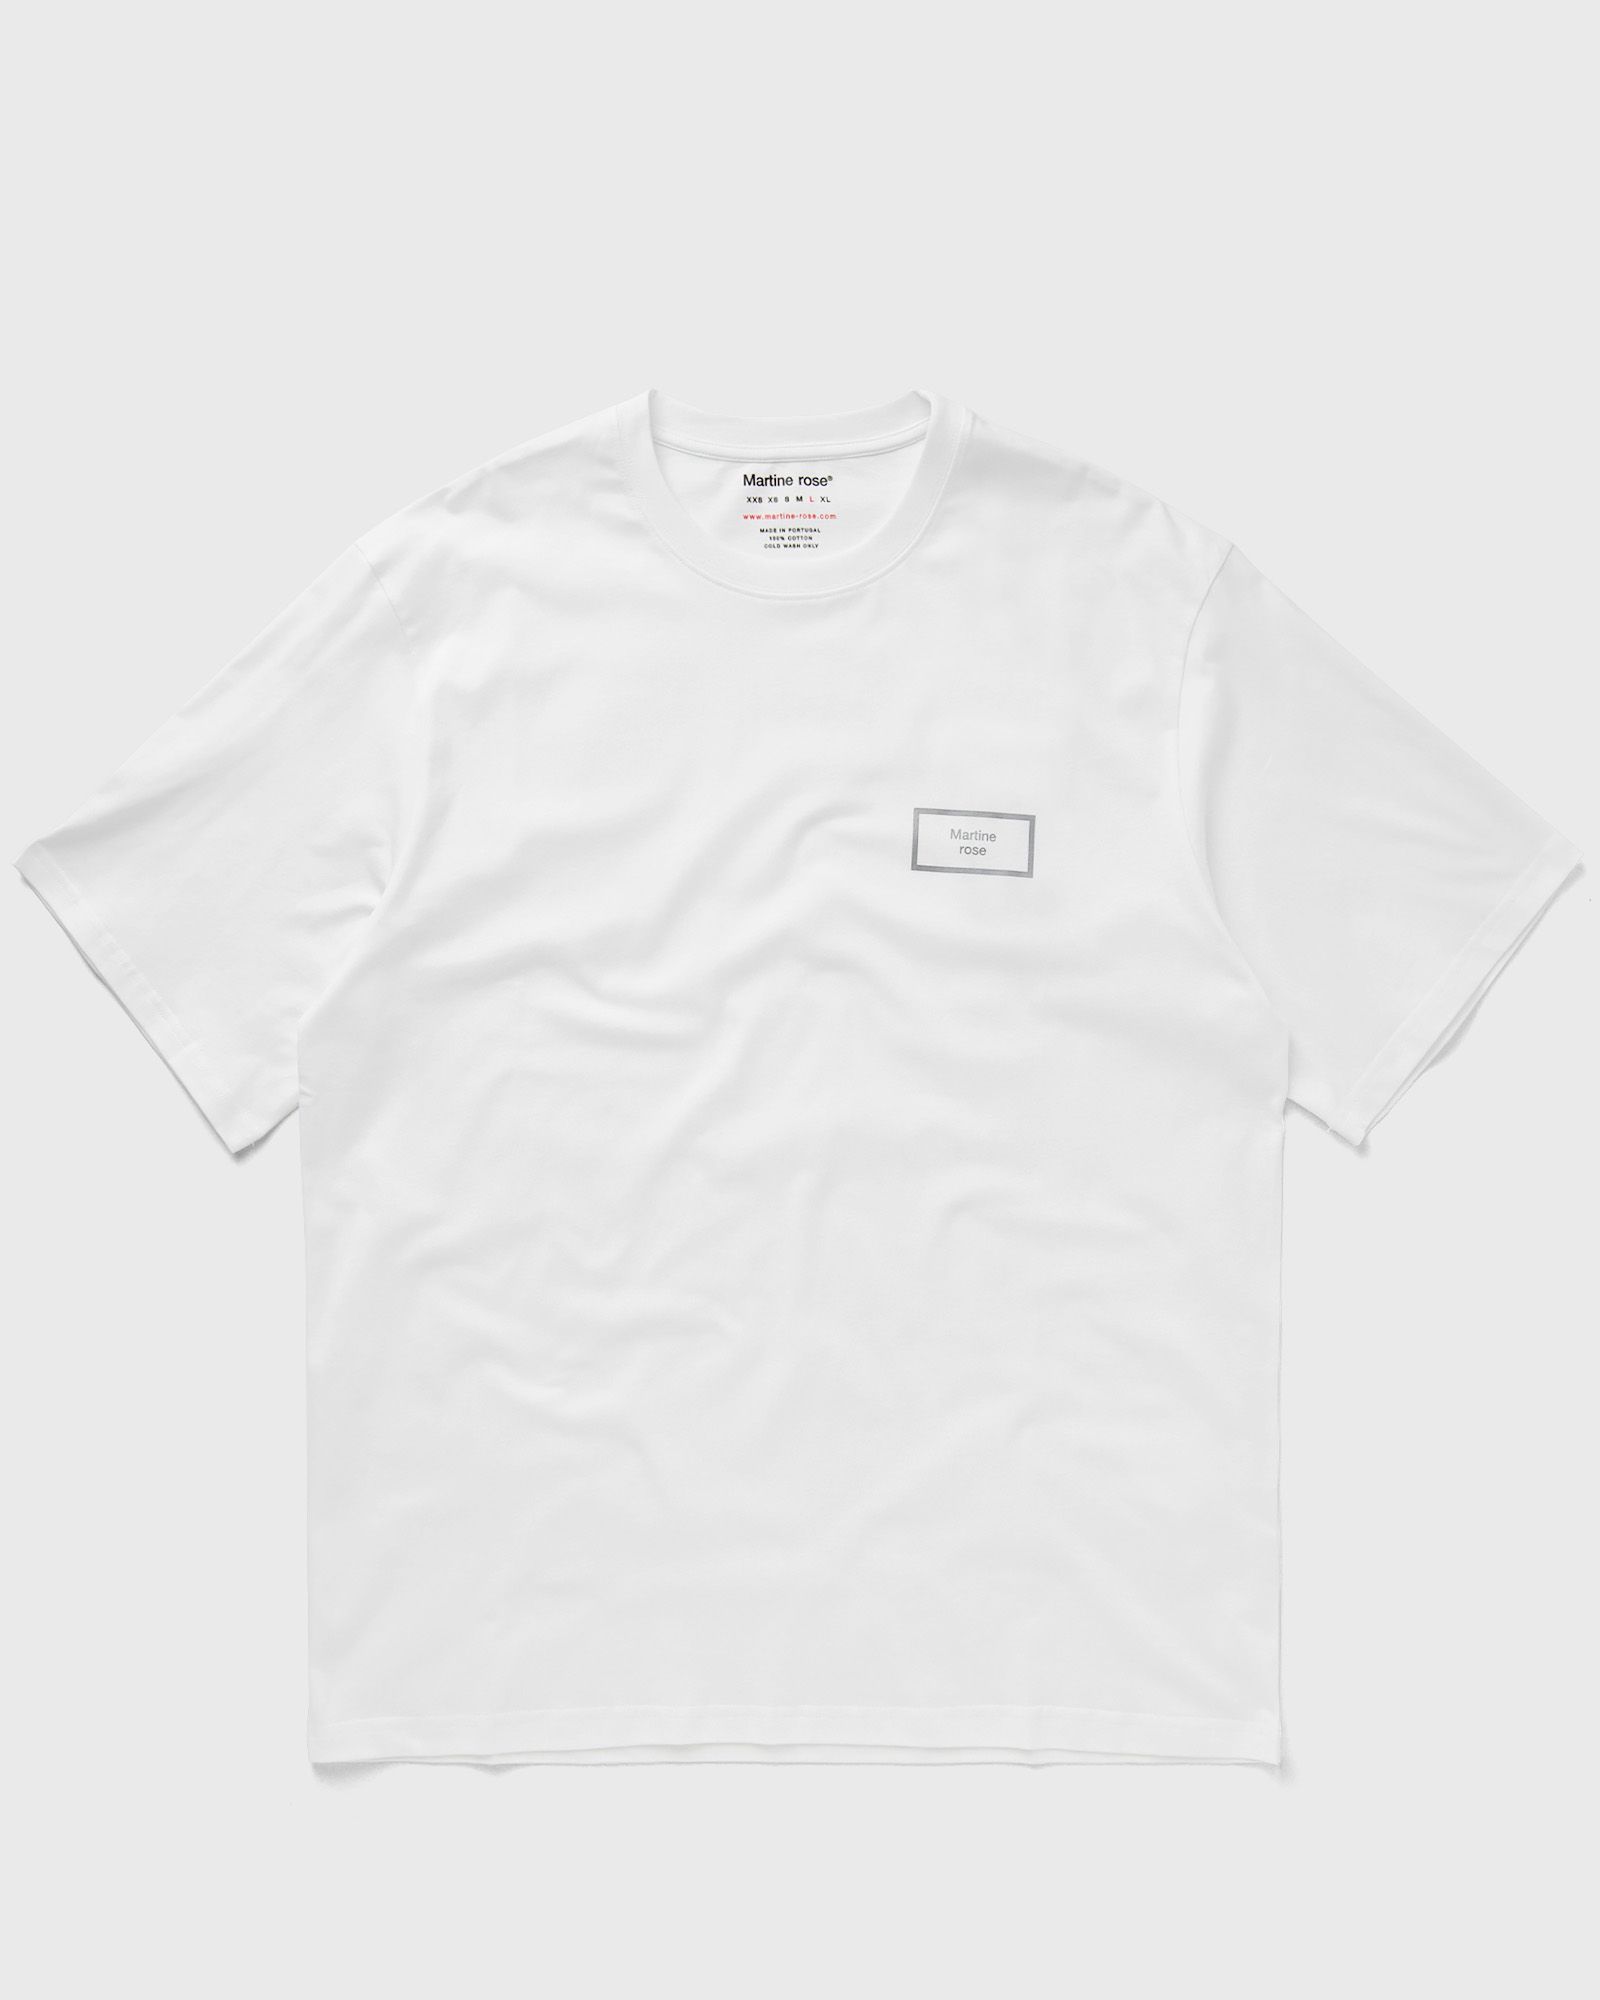 Martine Rose - classic t-shirt men shortsleeves white in größe:xl